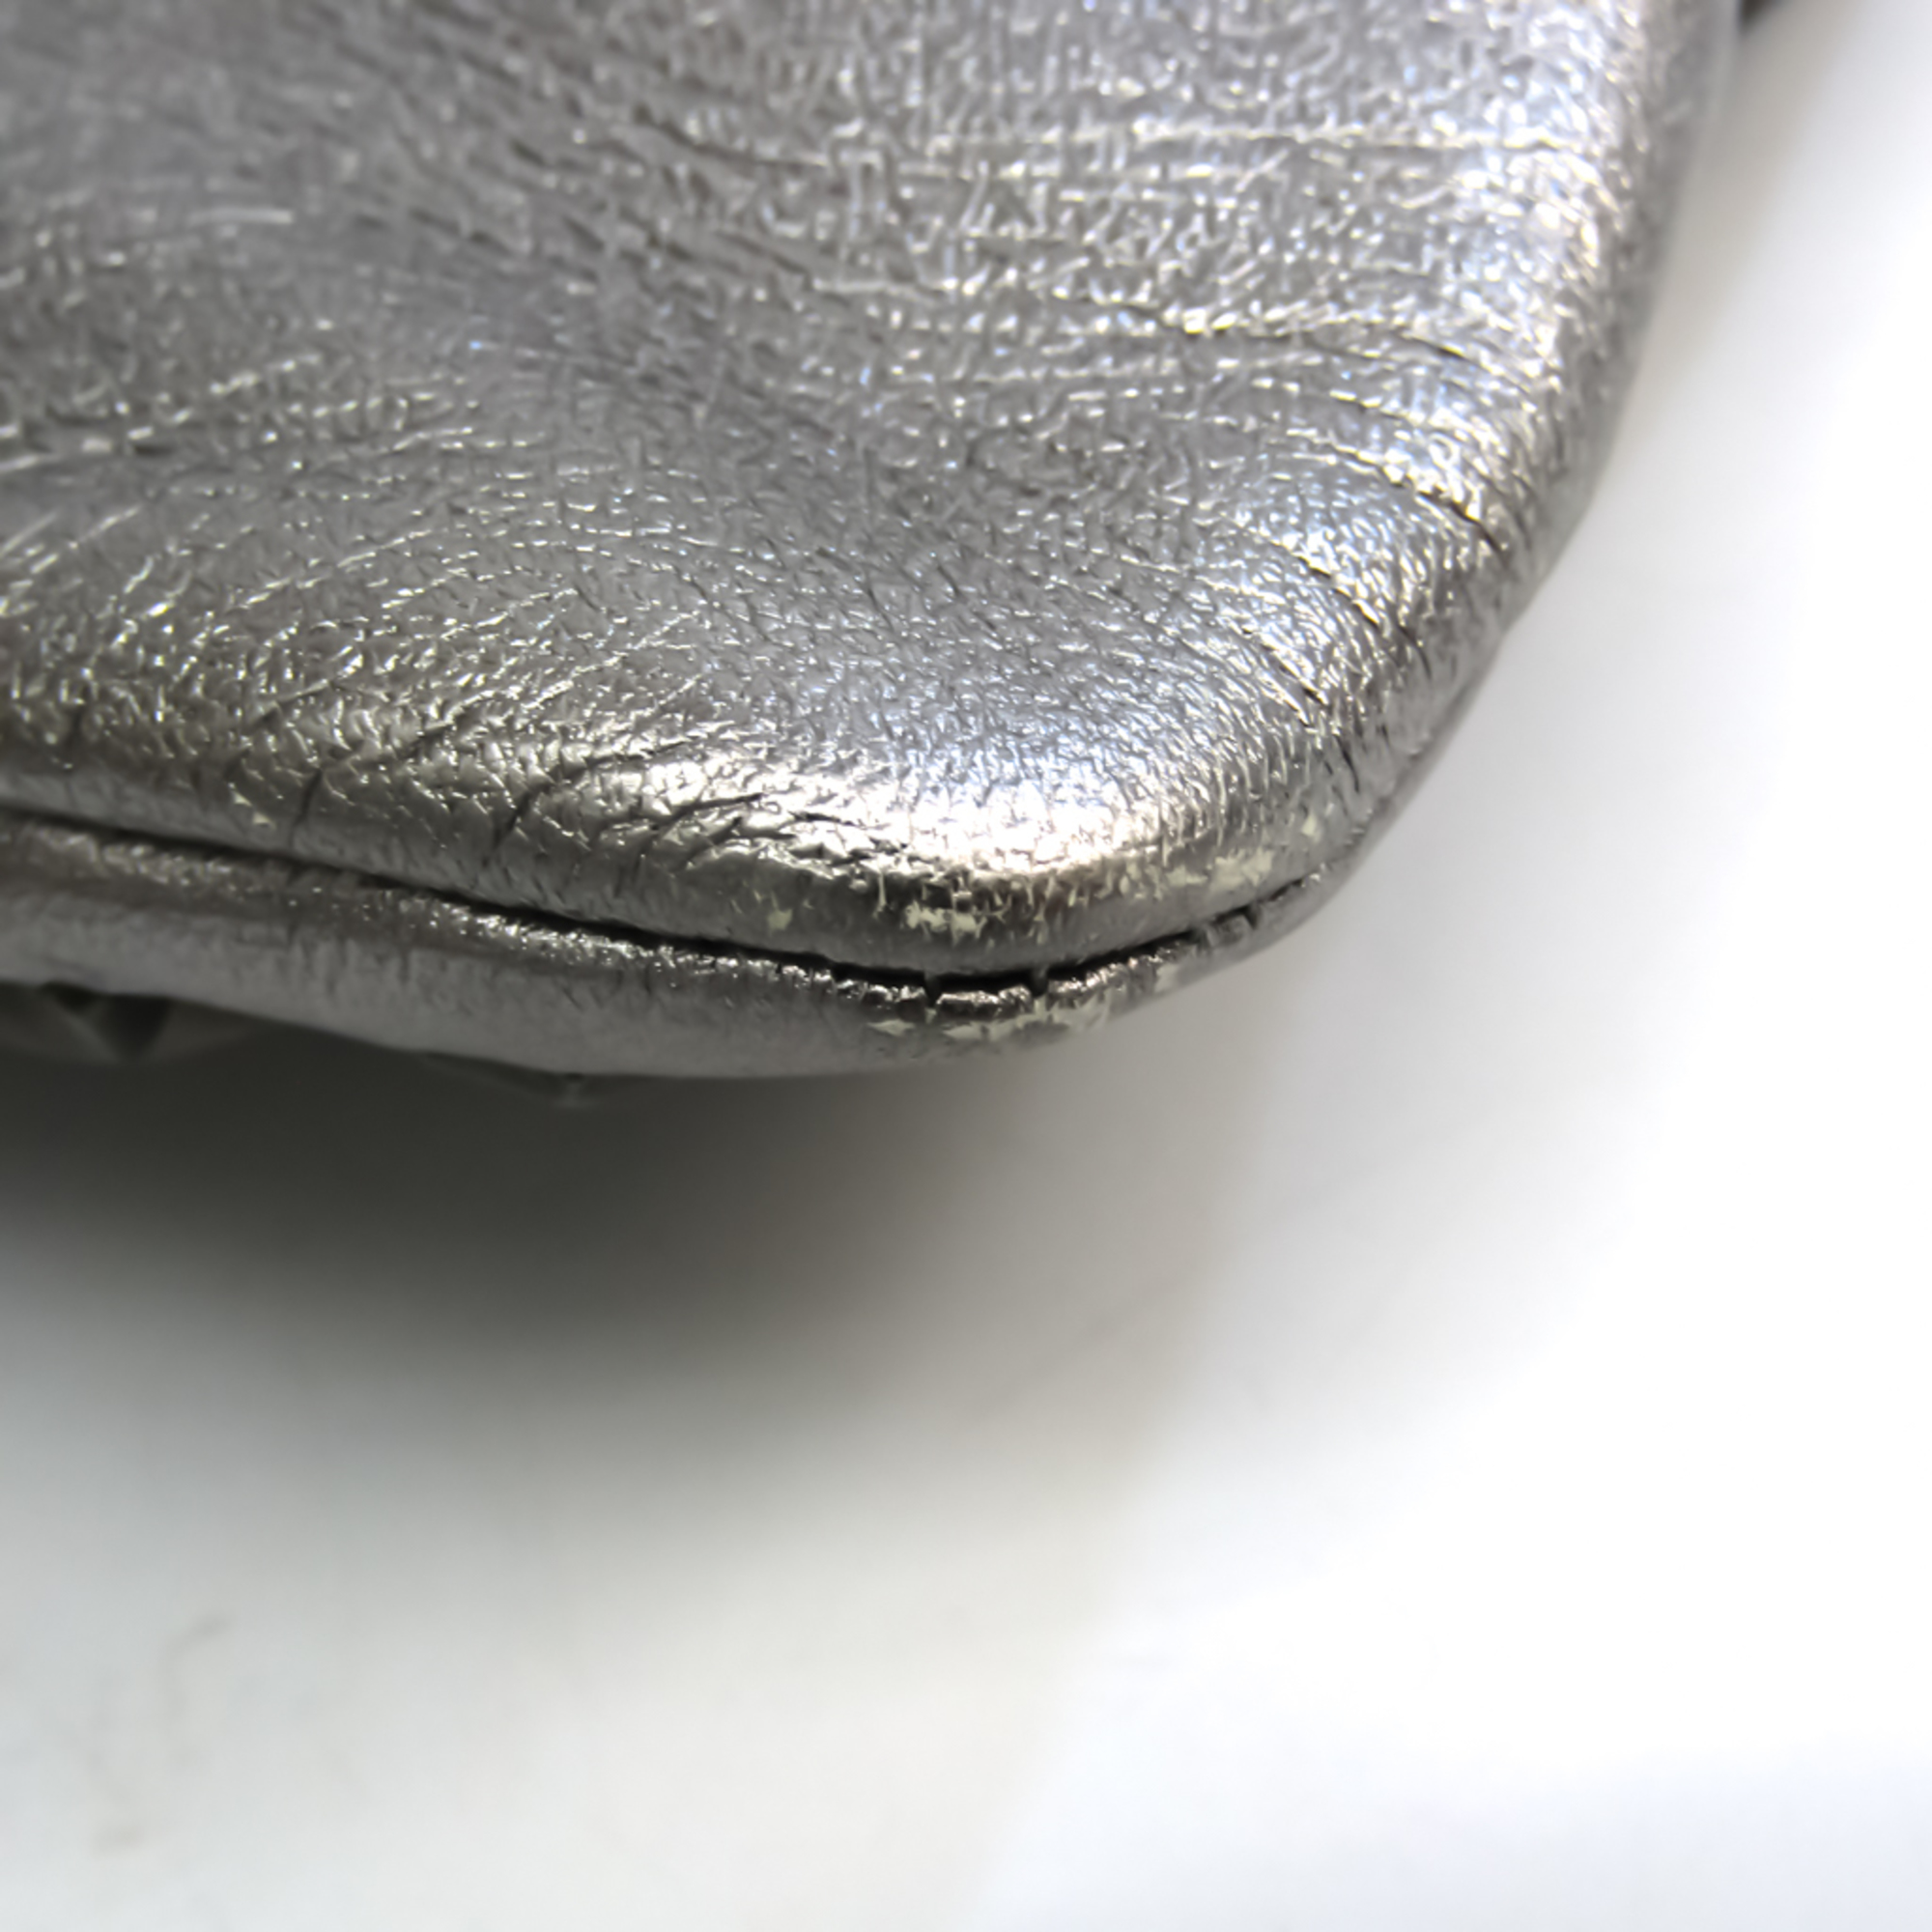 Jimmy Choo DEREK Unisex Leather Studded Clutch Bag Silver